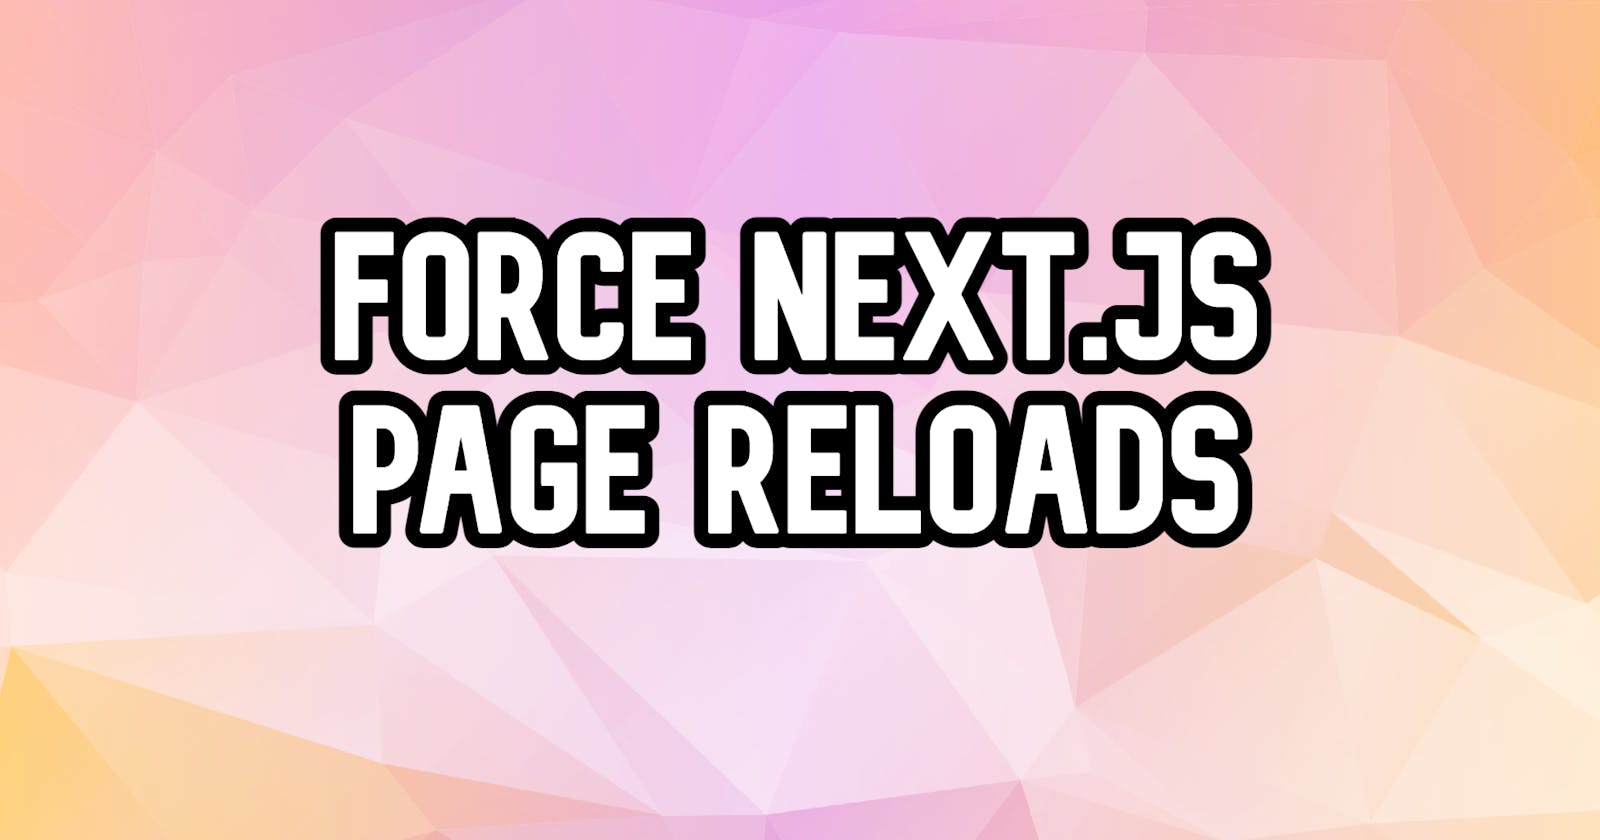 Force Reload Next.js Pages